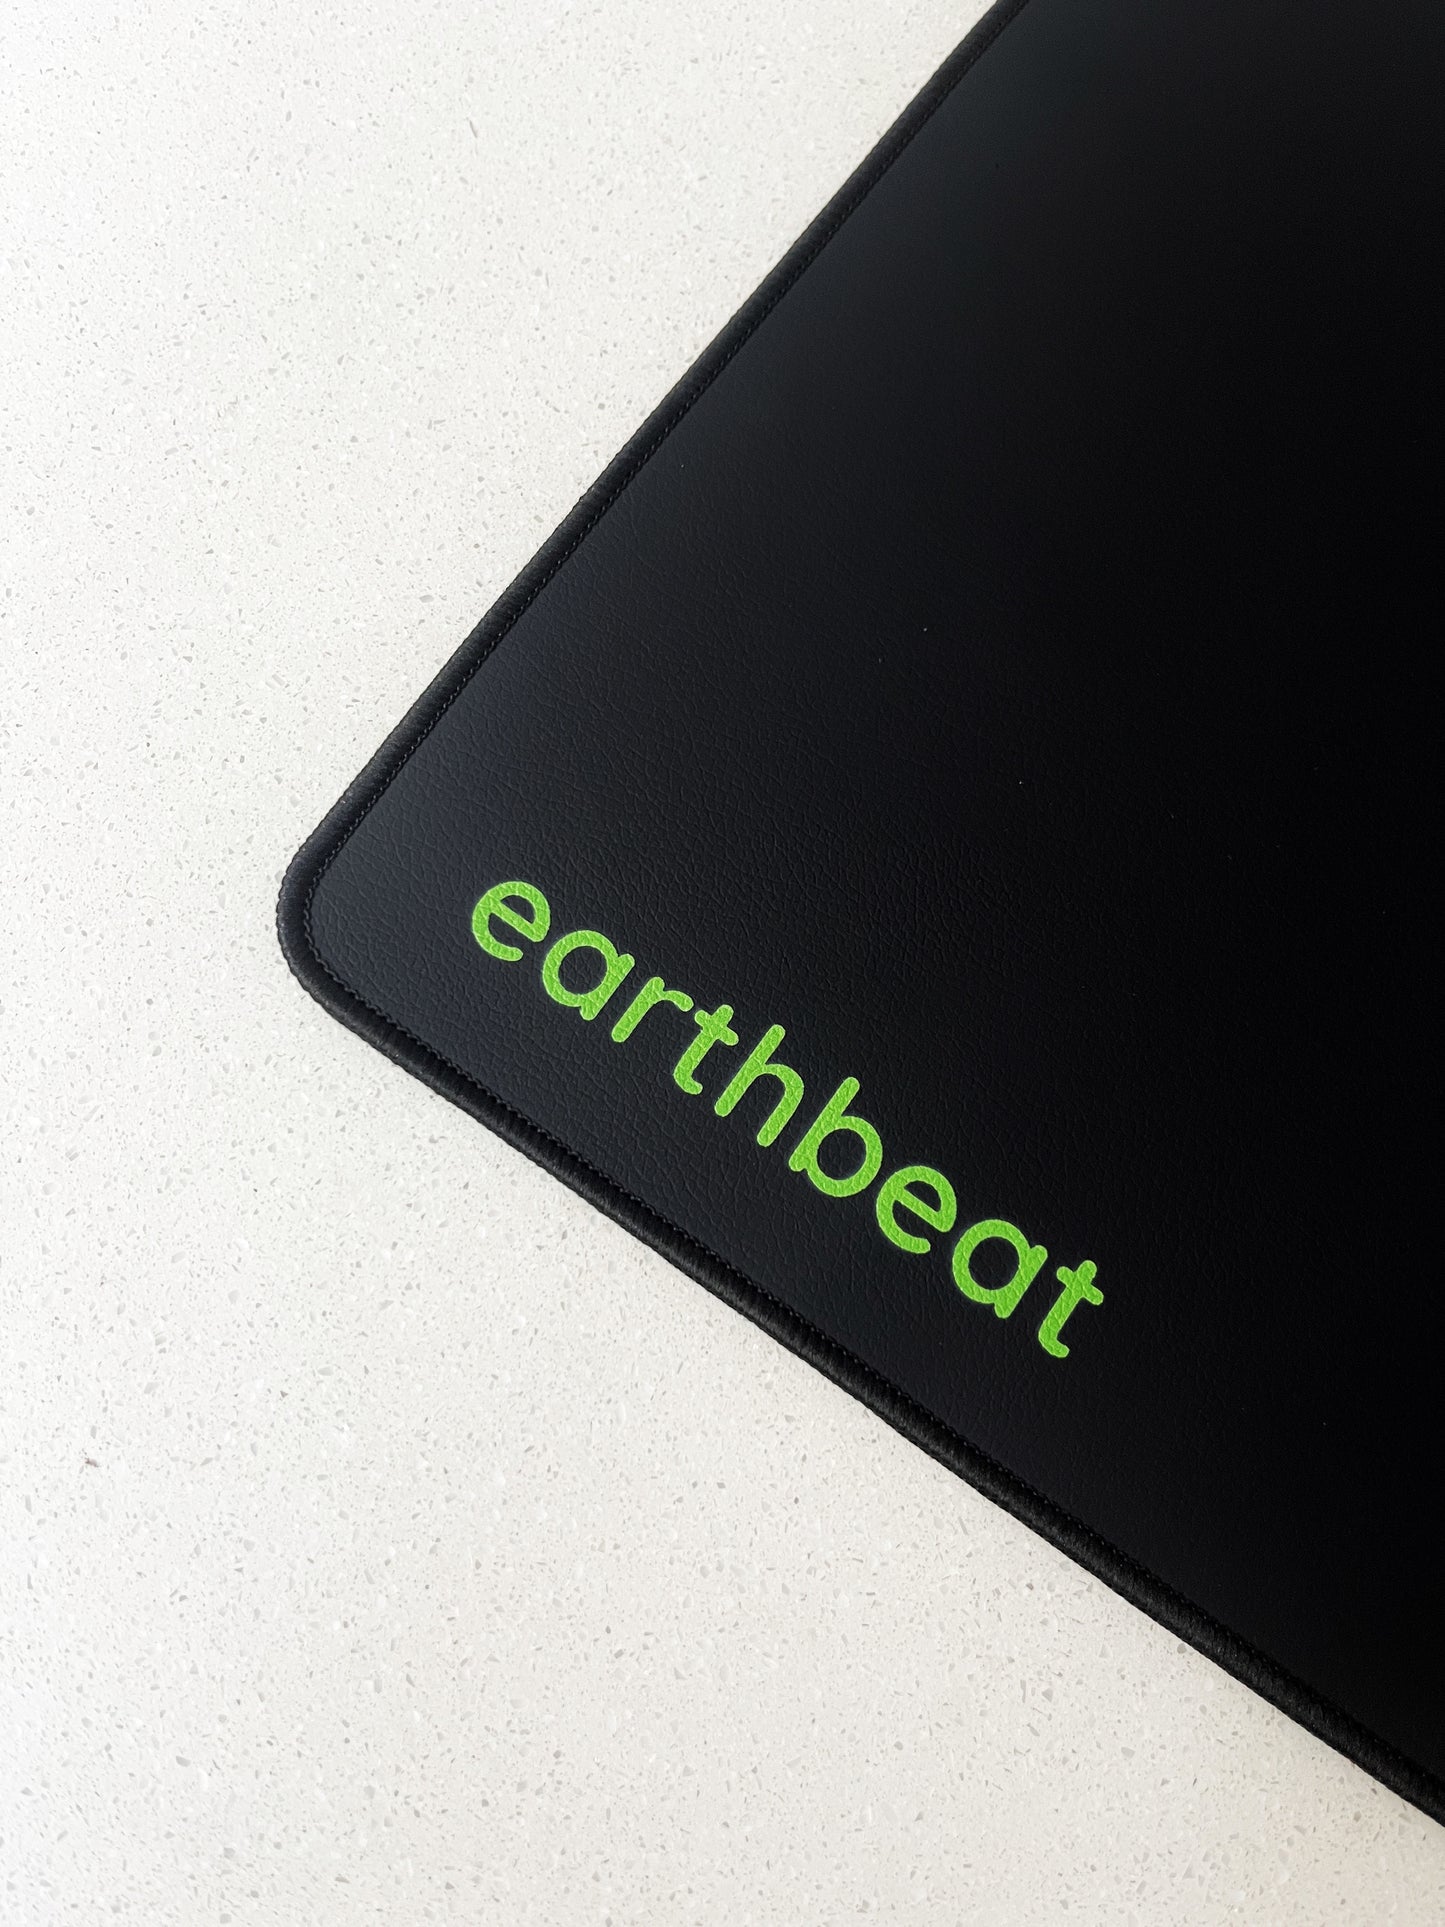 earthbeat Earthing Mousepad